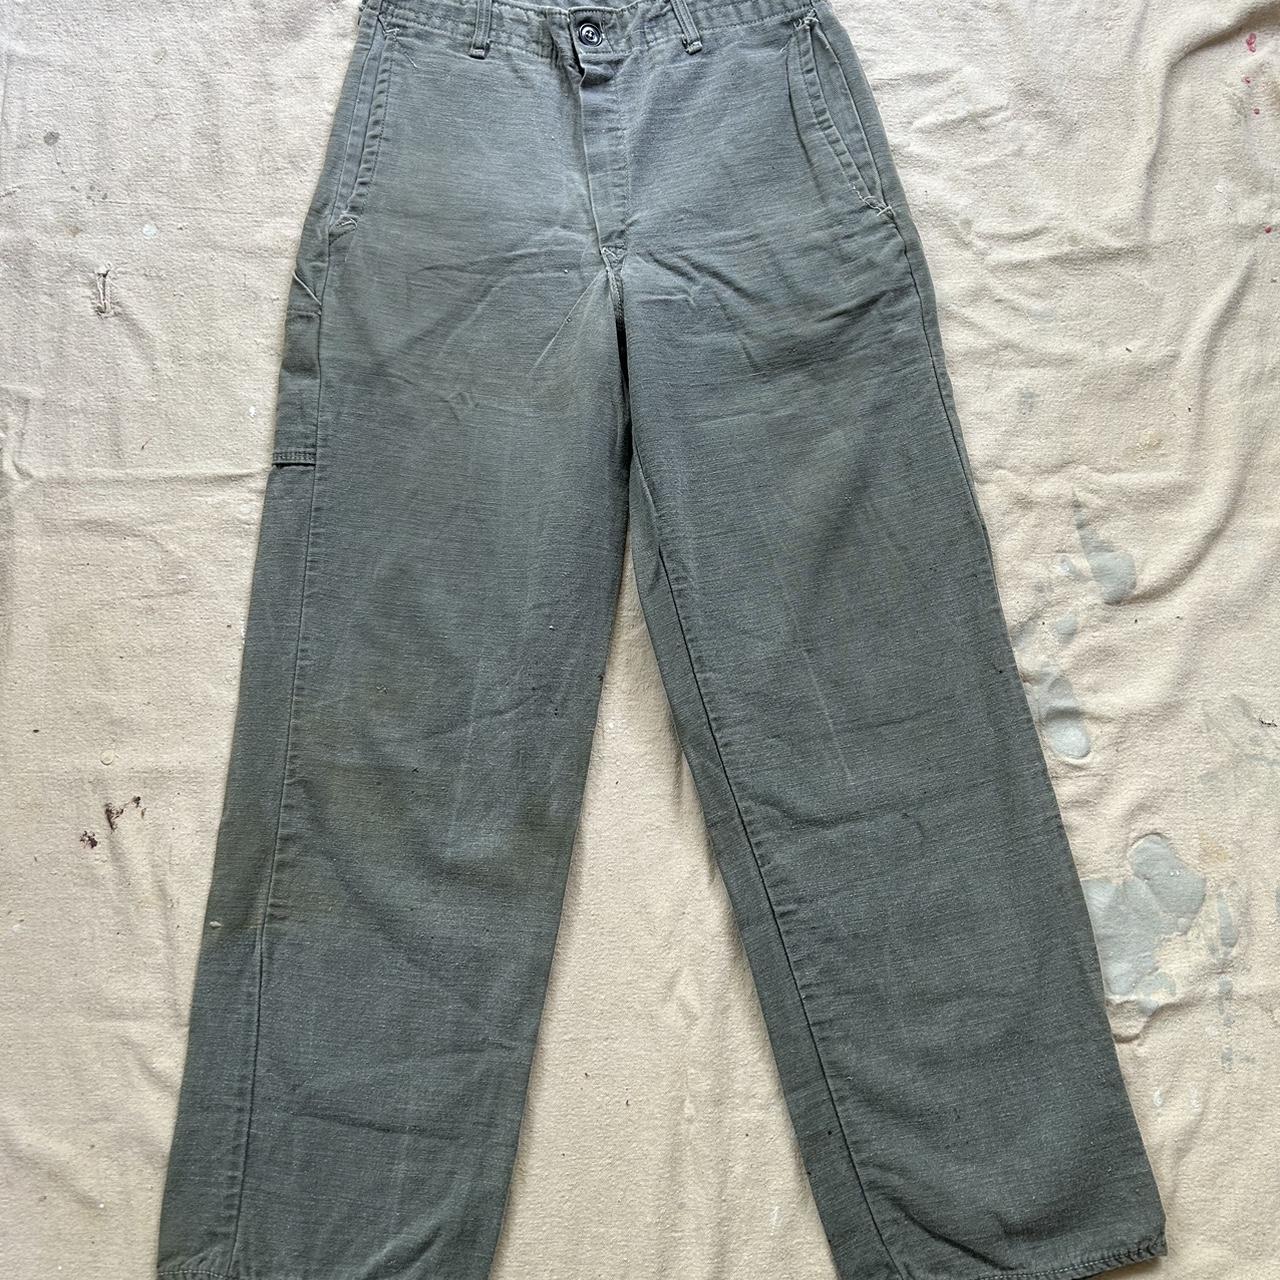 Vintage 70’s utility pants Thick cotton. Some... - Depop